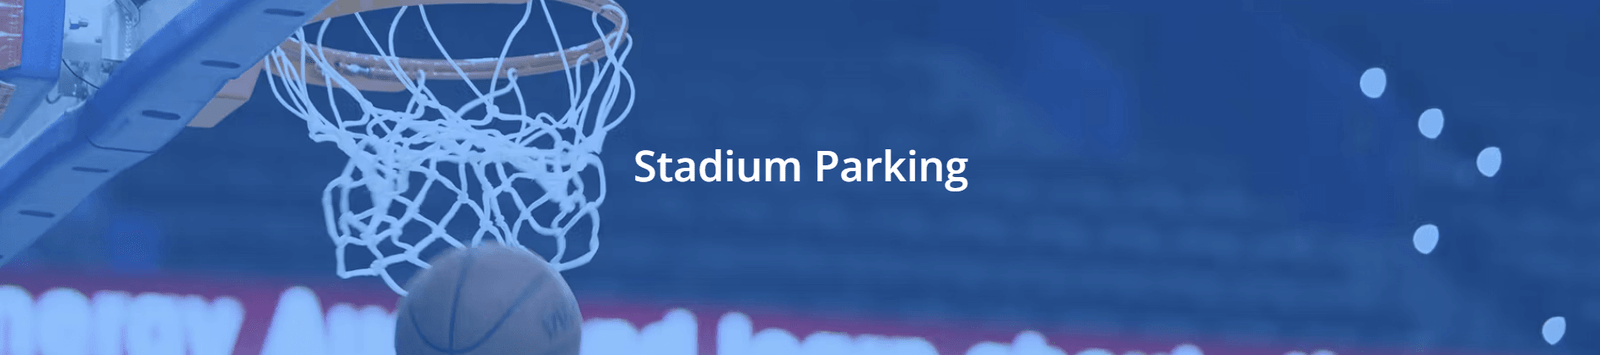 SpotHero Stadium Parking